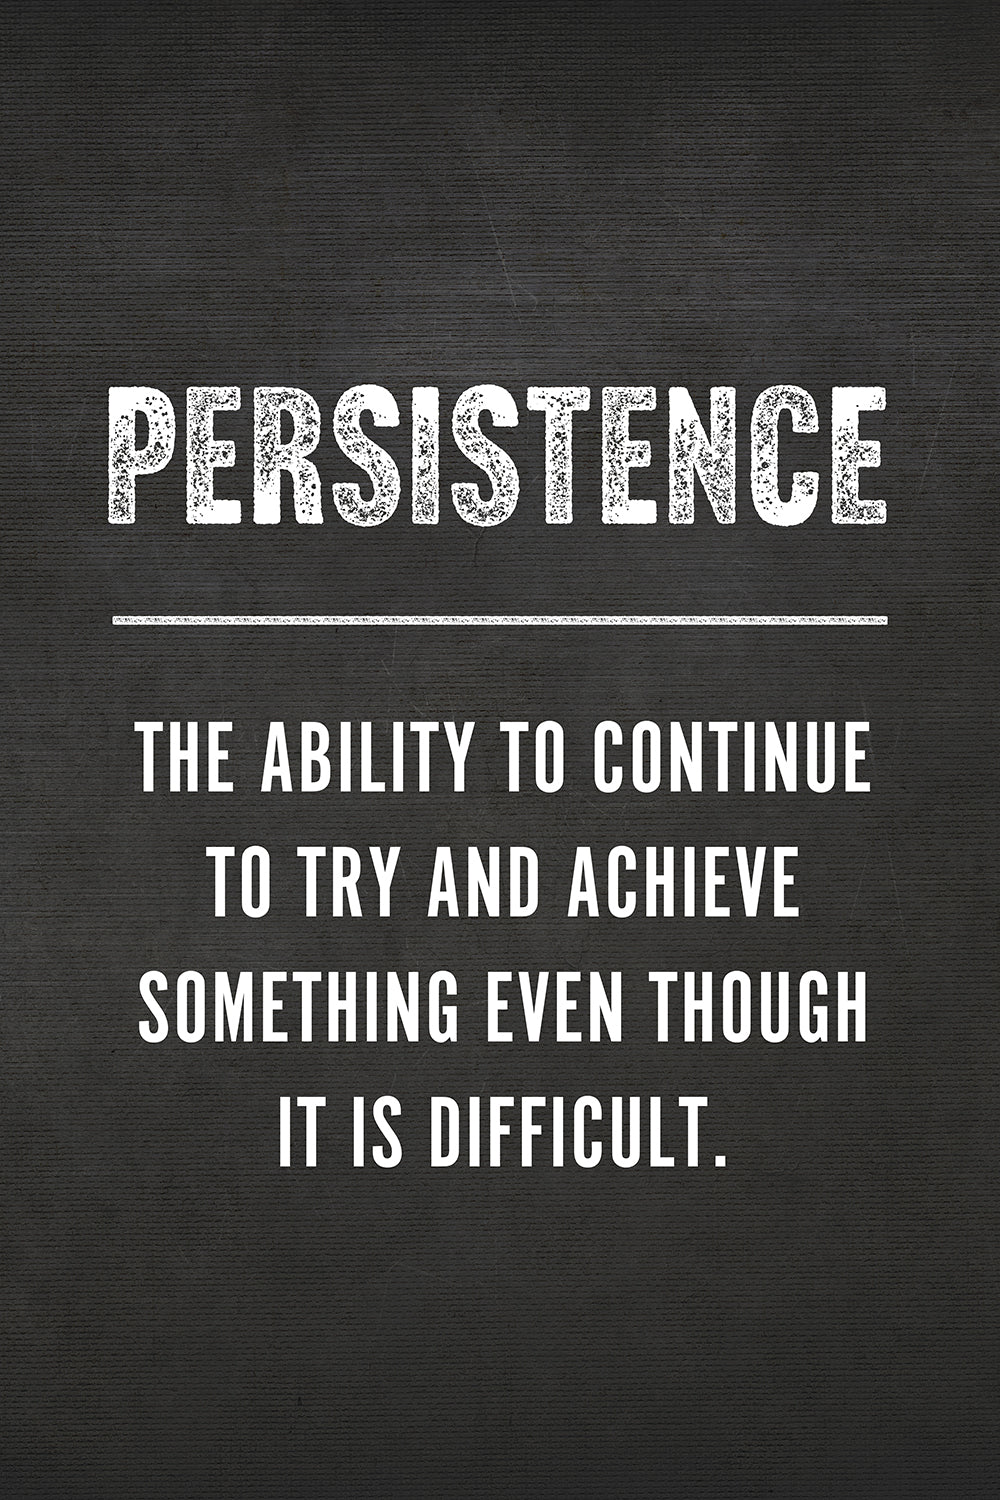 Persistence Motivational Wall Art Print